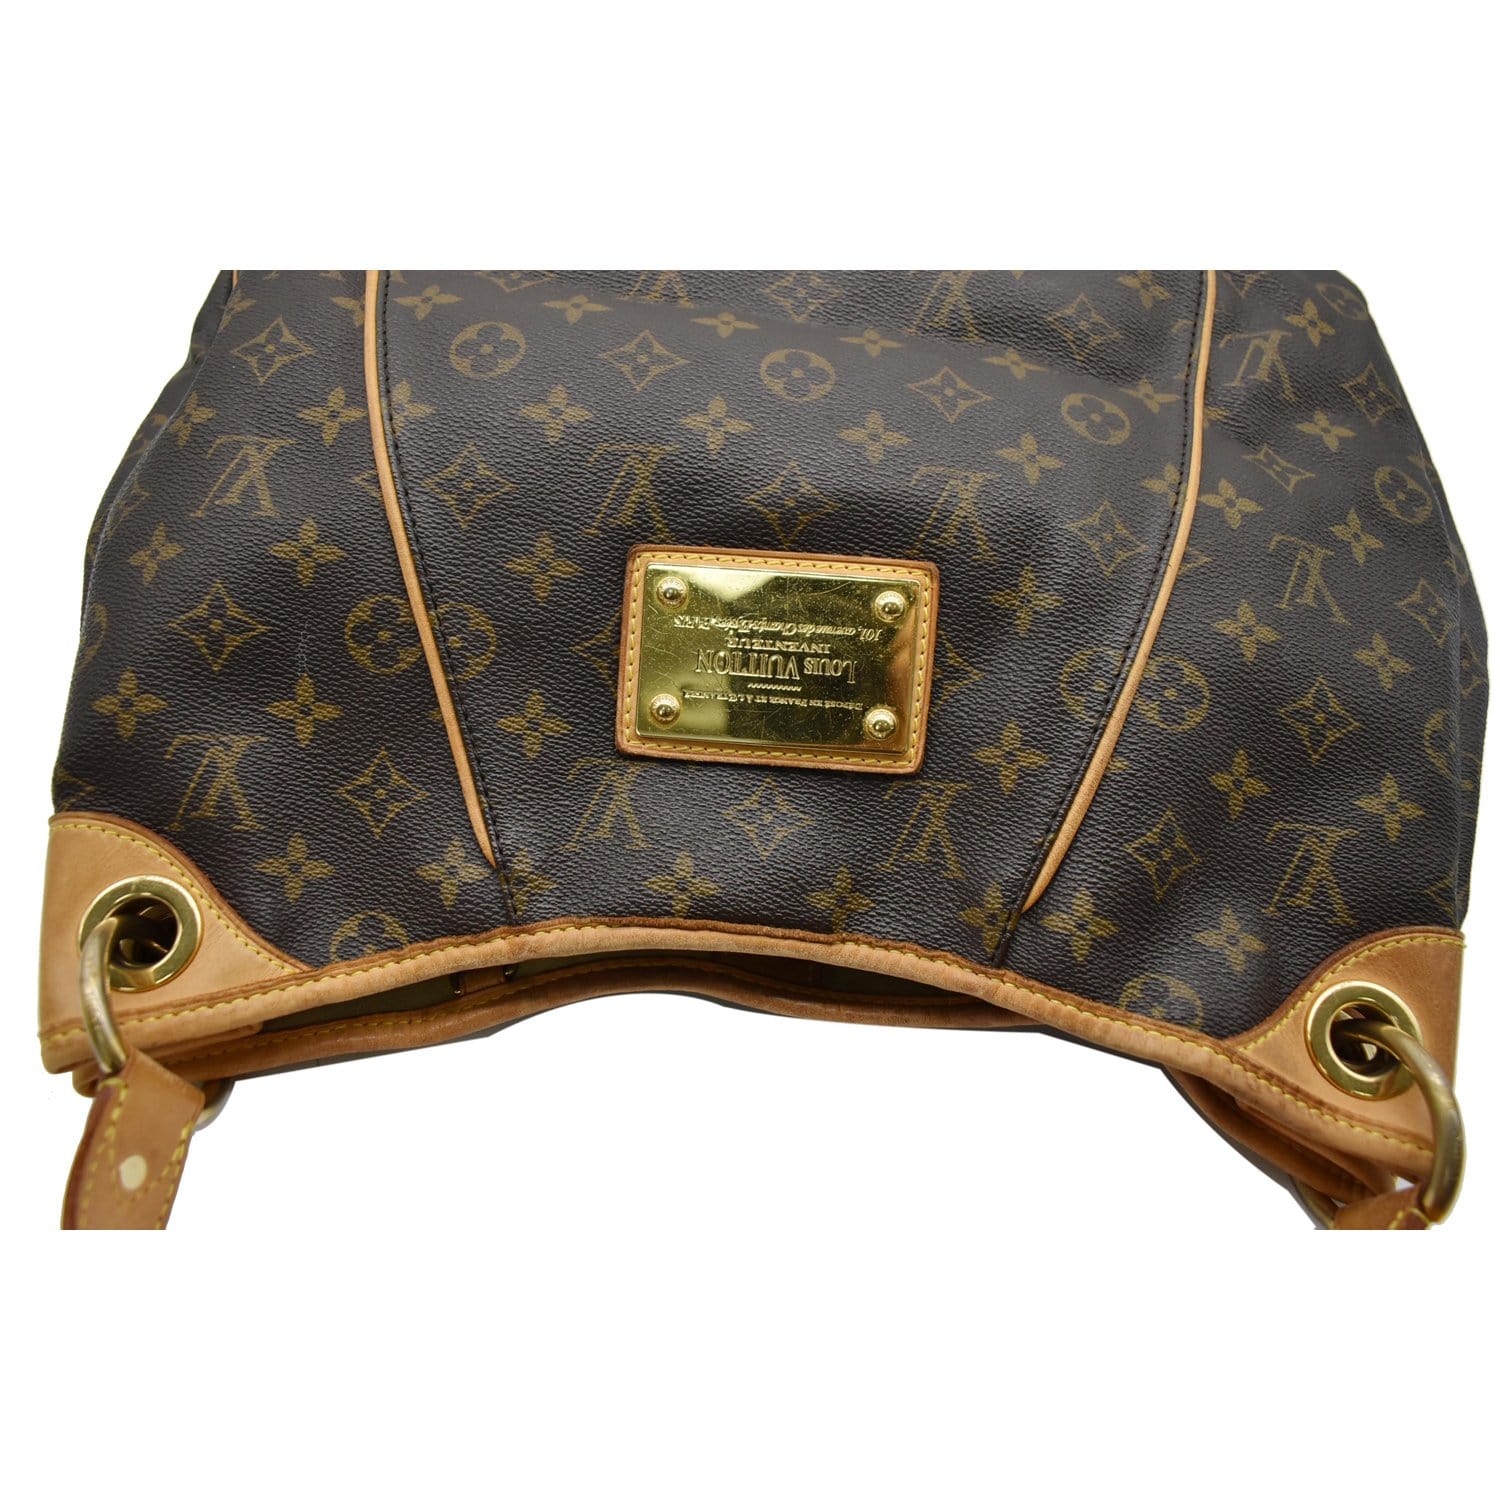 Louis Vuitton Galliera PM Monogram Hobo Shoulder Bag